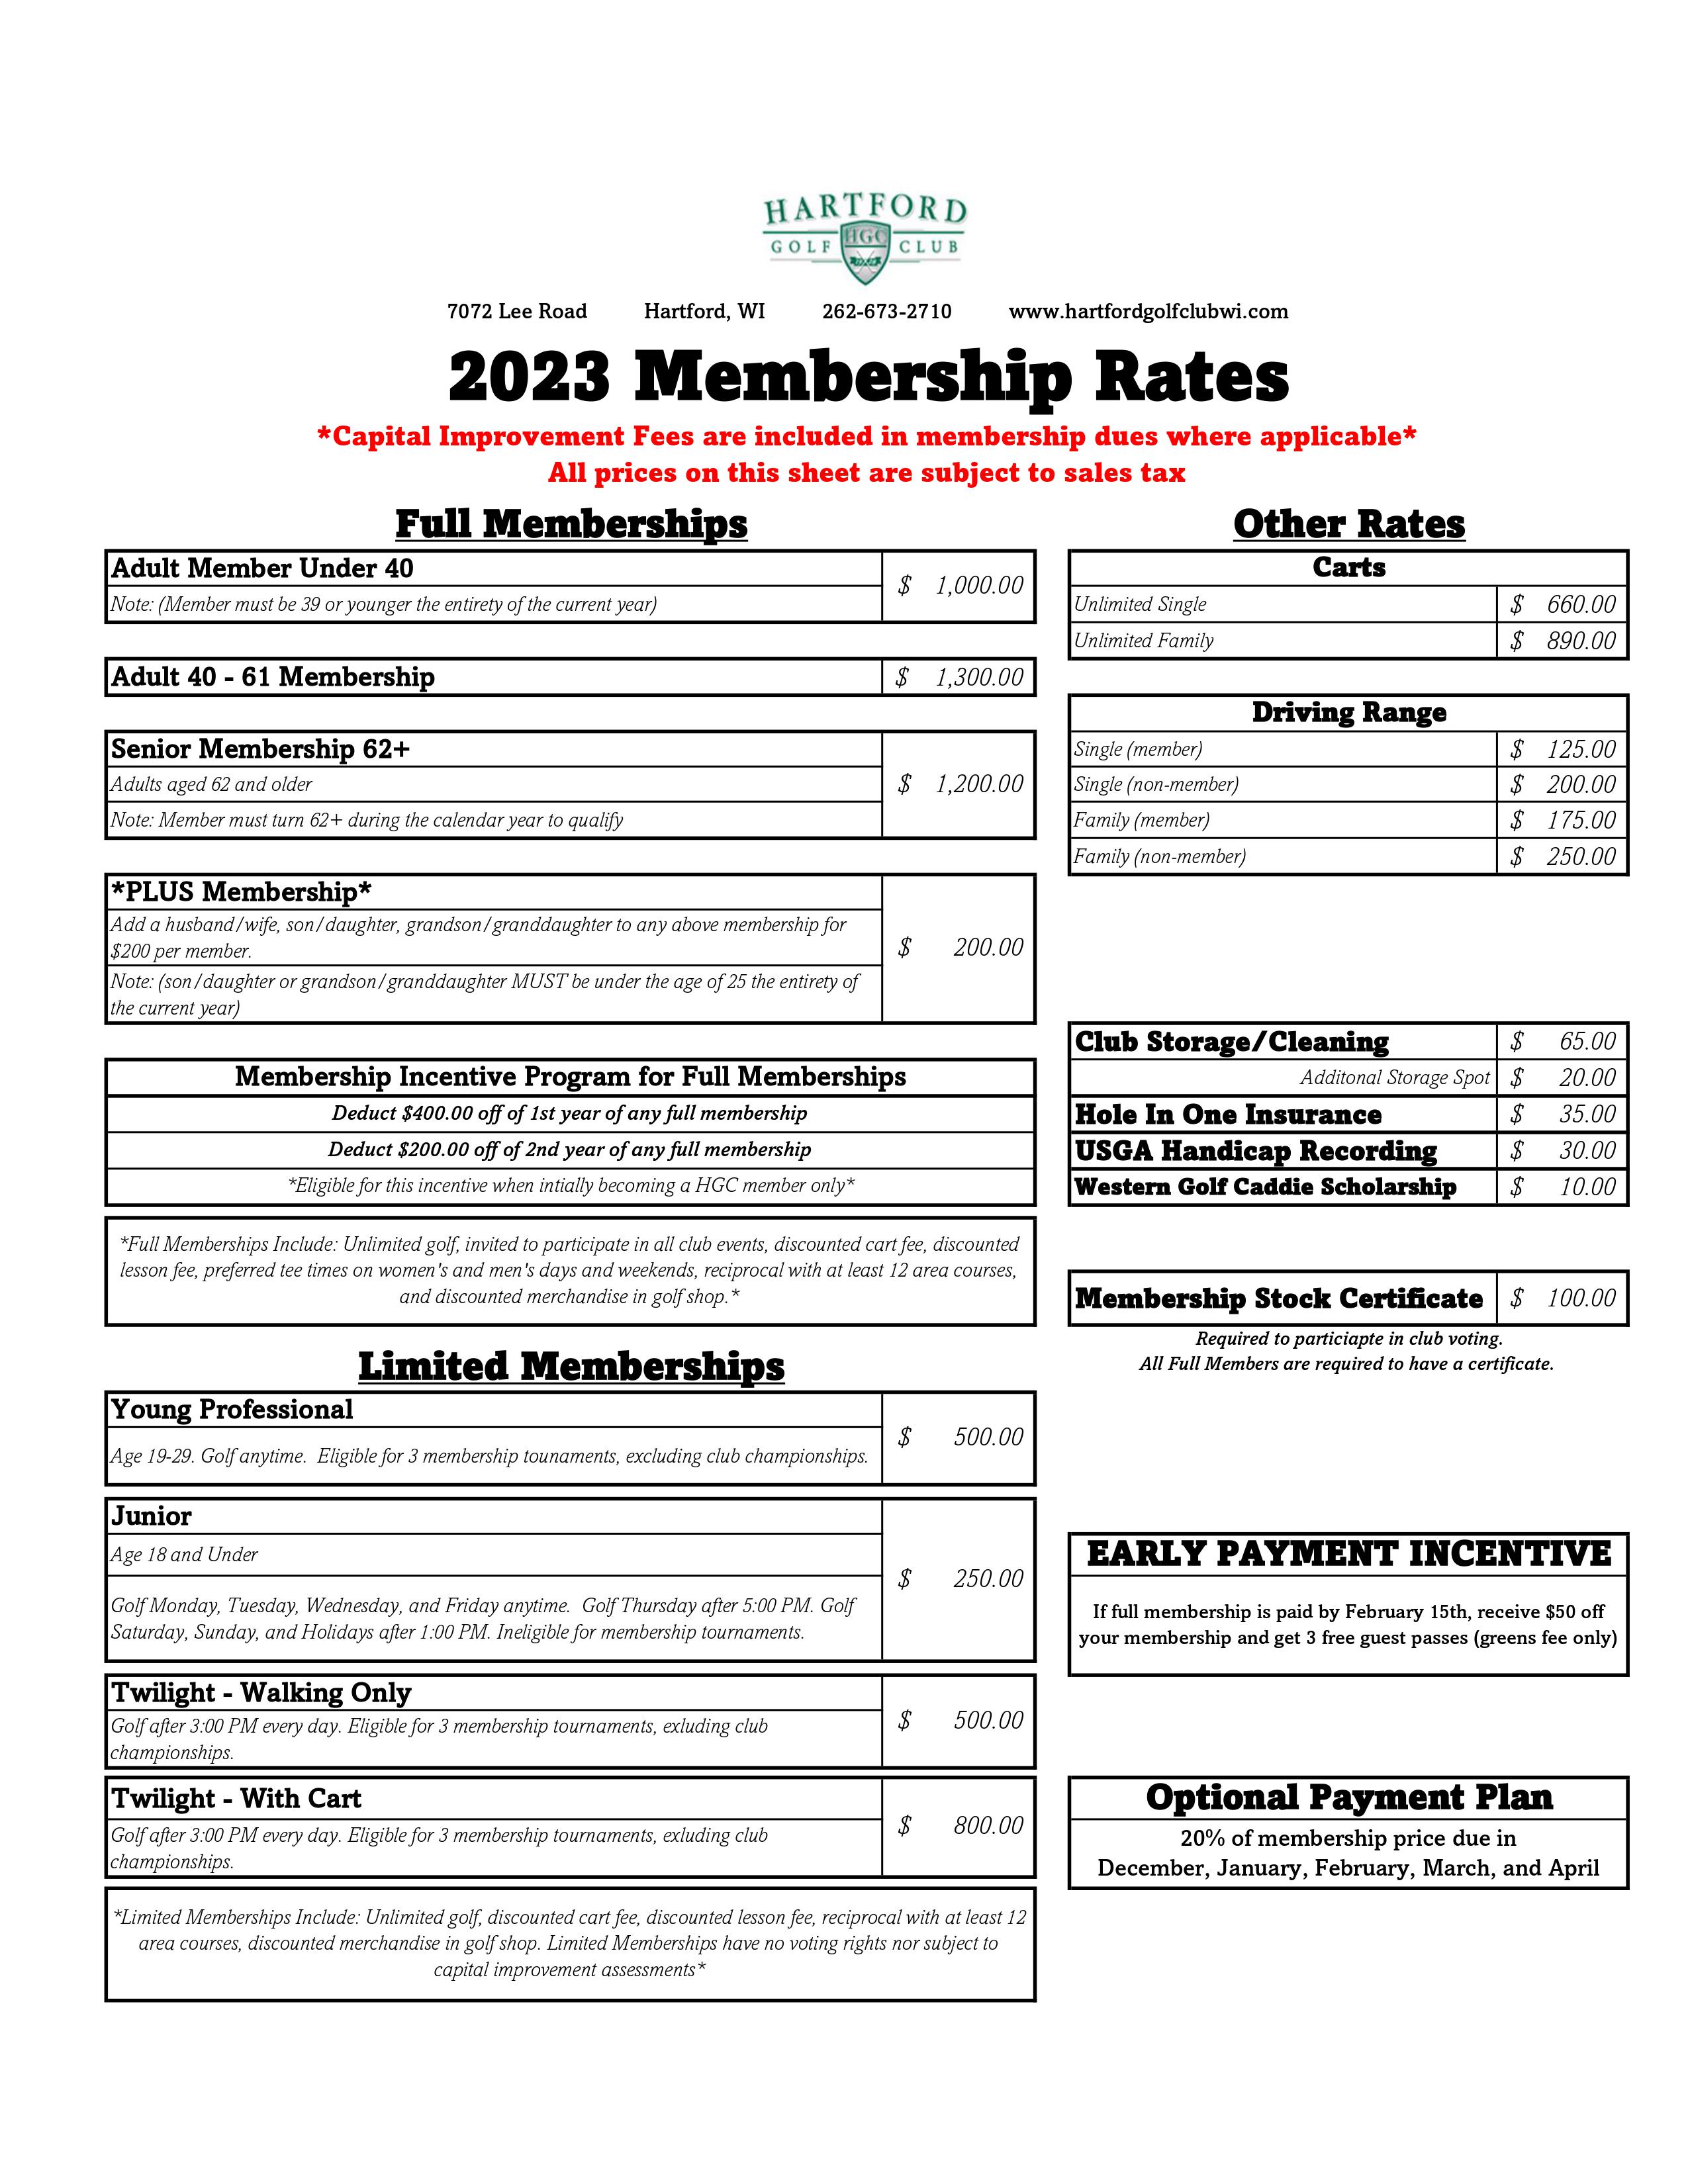 2022 Membership Rates FINAL